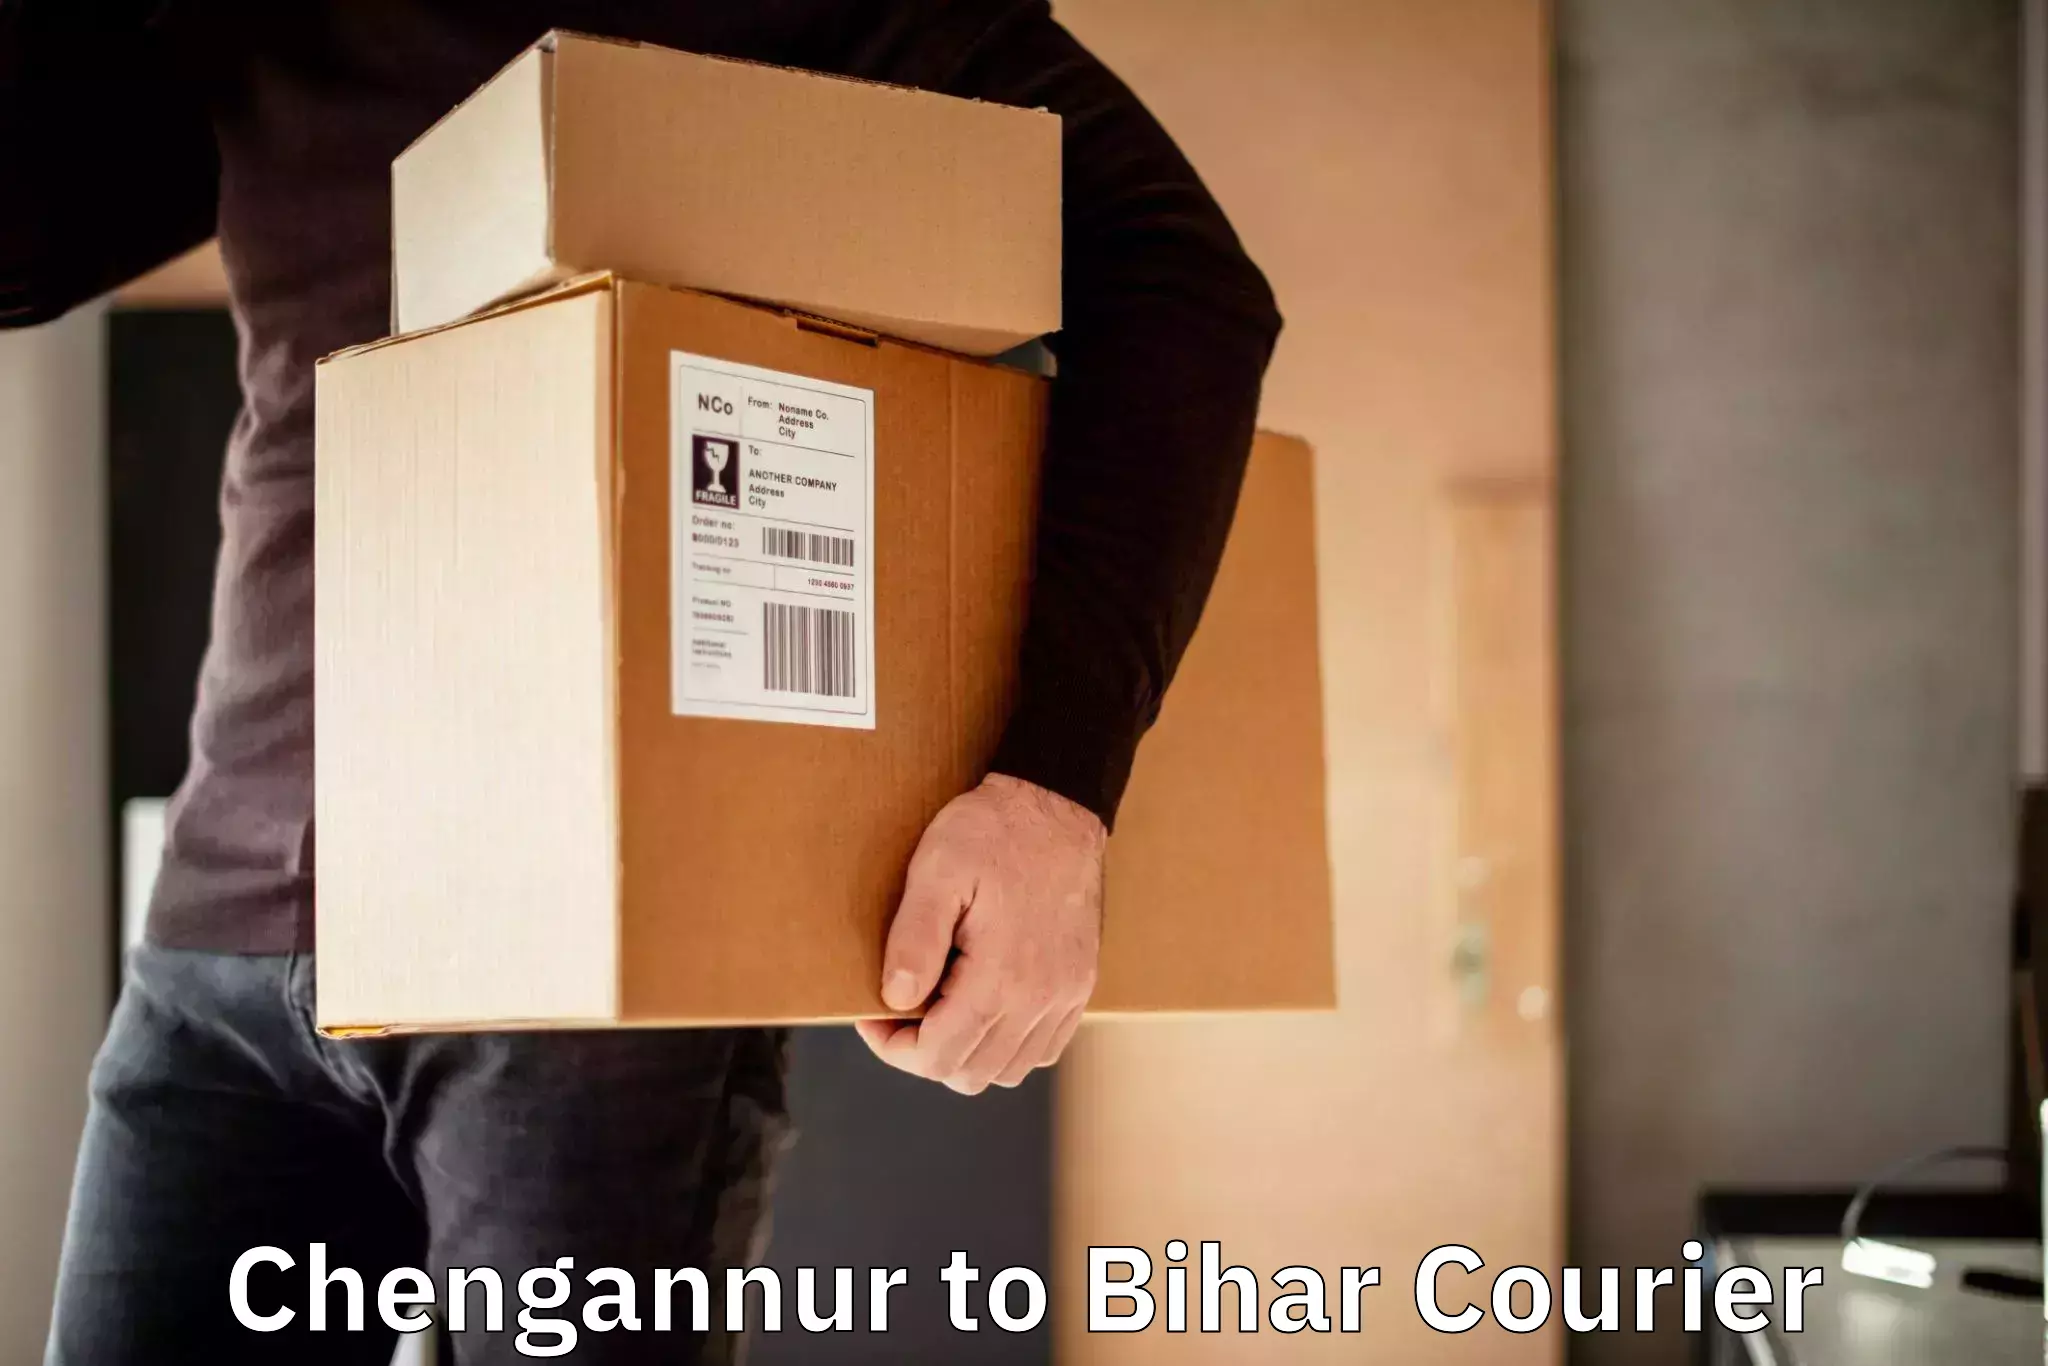 Quick dispatch service Chengannur to Brahmapur